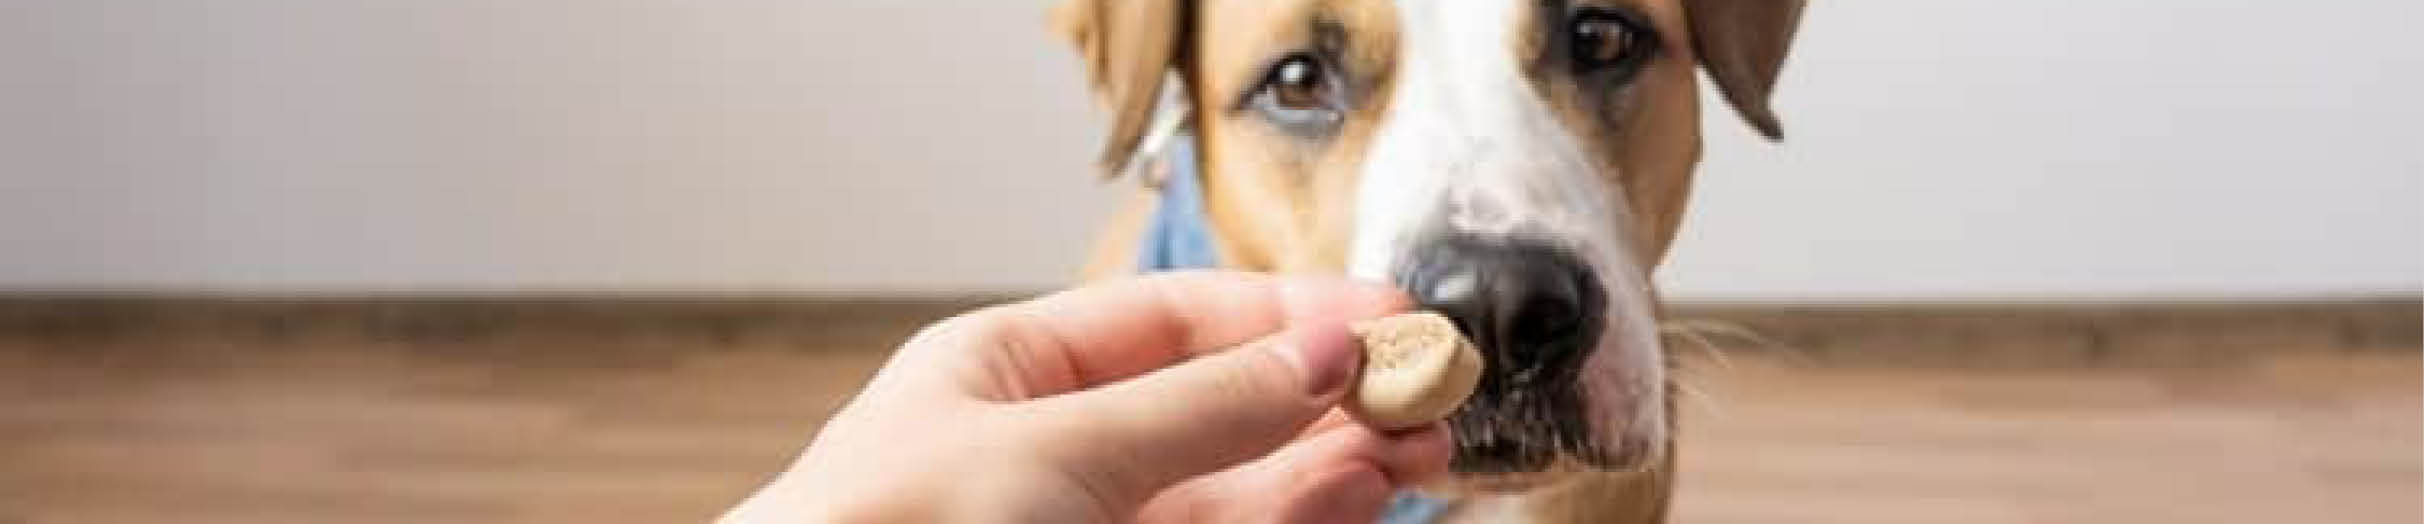 Buy Dog Treats & Chews at Absolute Pets 